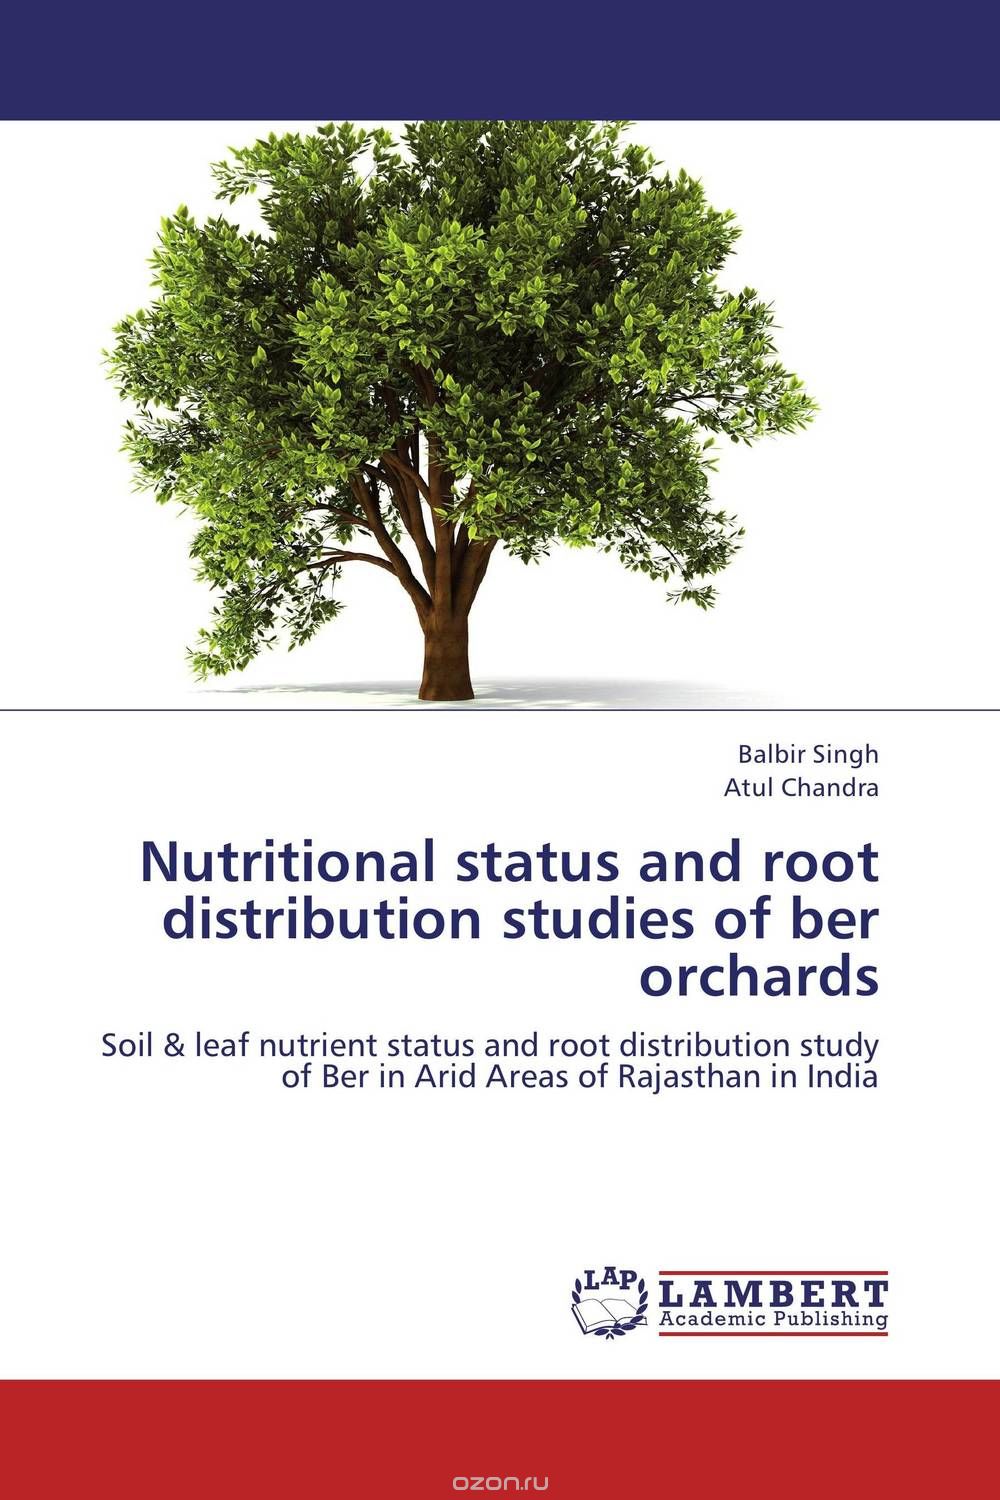 Скачать книгу "Nutritional status and root distribution studies of ber orchards"